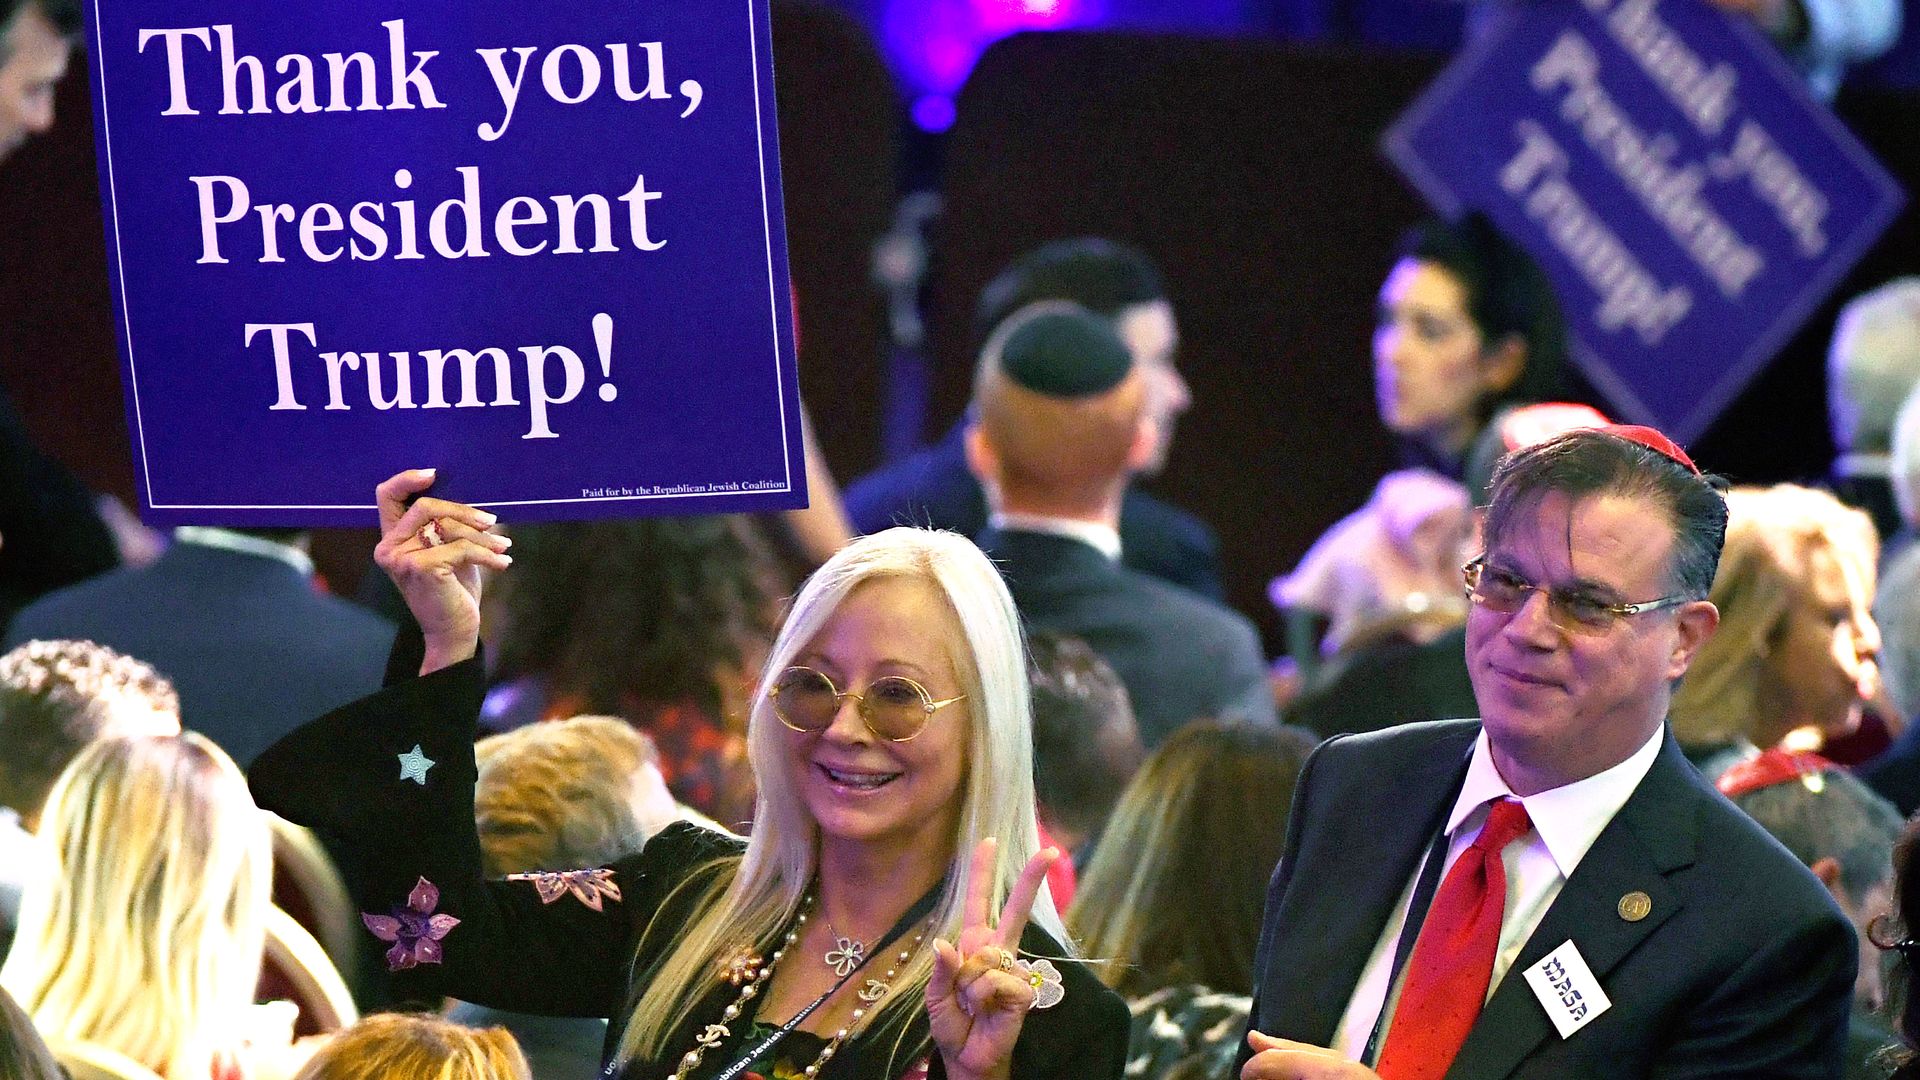 President Donald Trump Among Speakers At Republican Jewish Coalition In Las Vegas